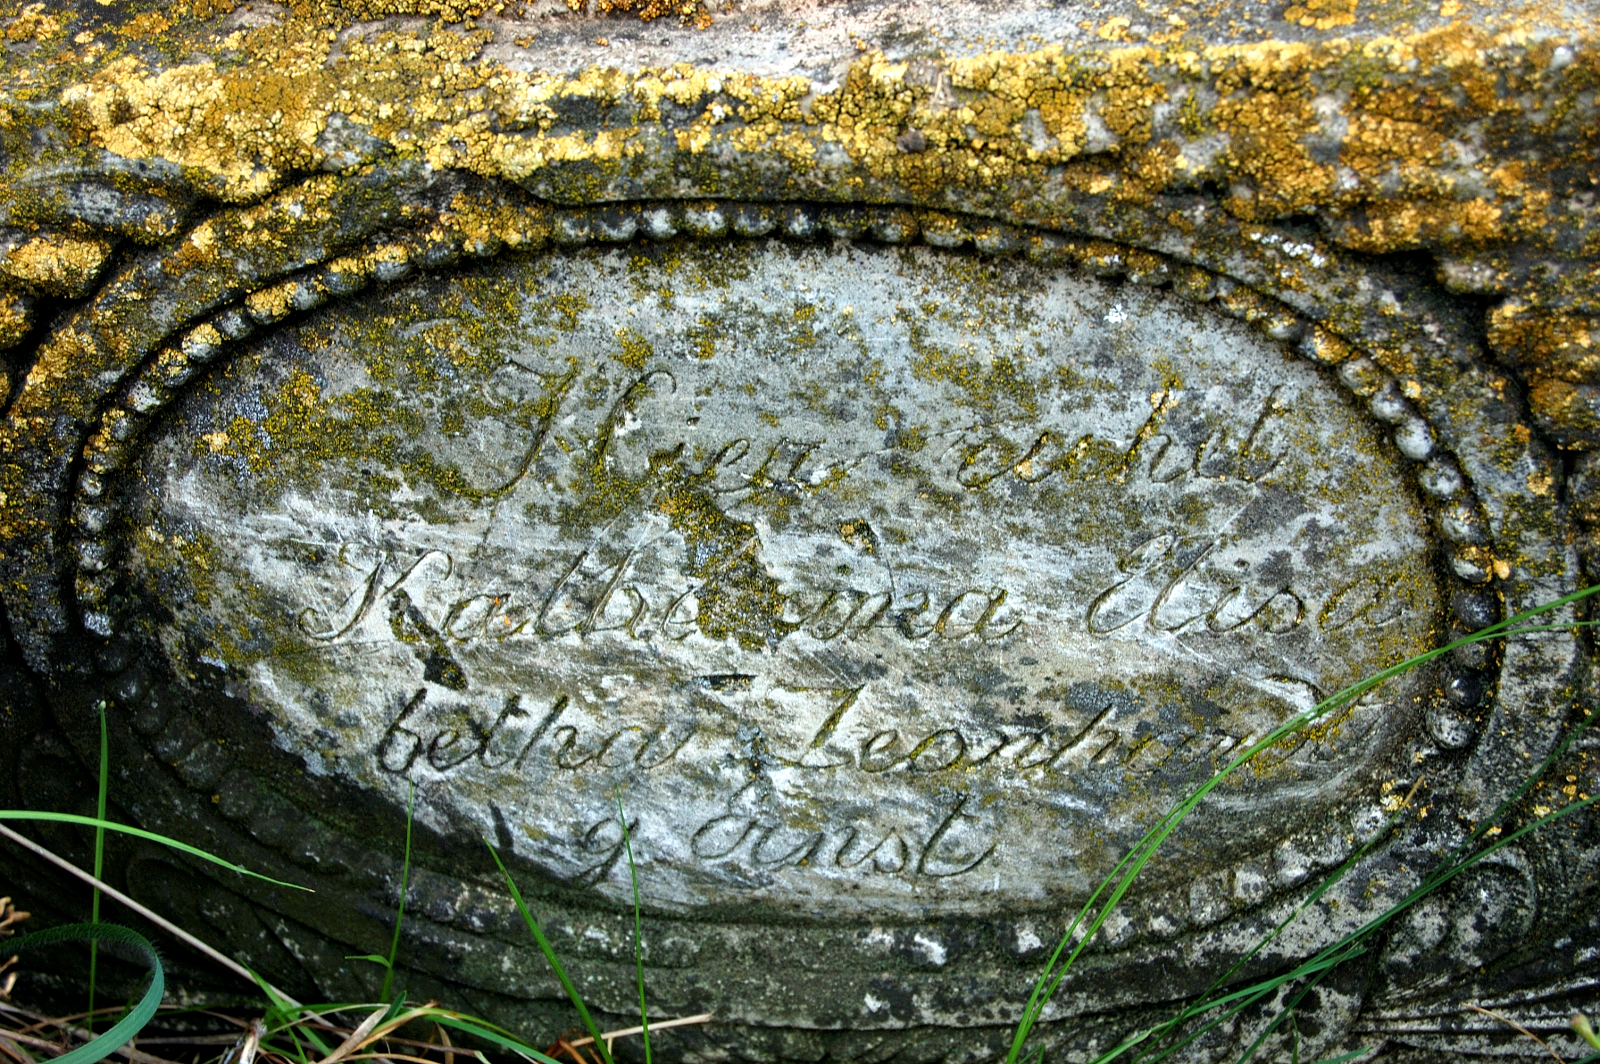 Inscription on the headstone reads: "Here rests Katherina Elisabetha Leonhardt, born Ernst". Courtesy of Steve Schreiber (2006).